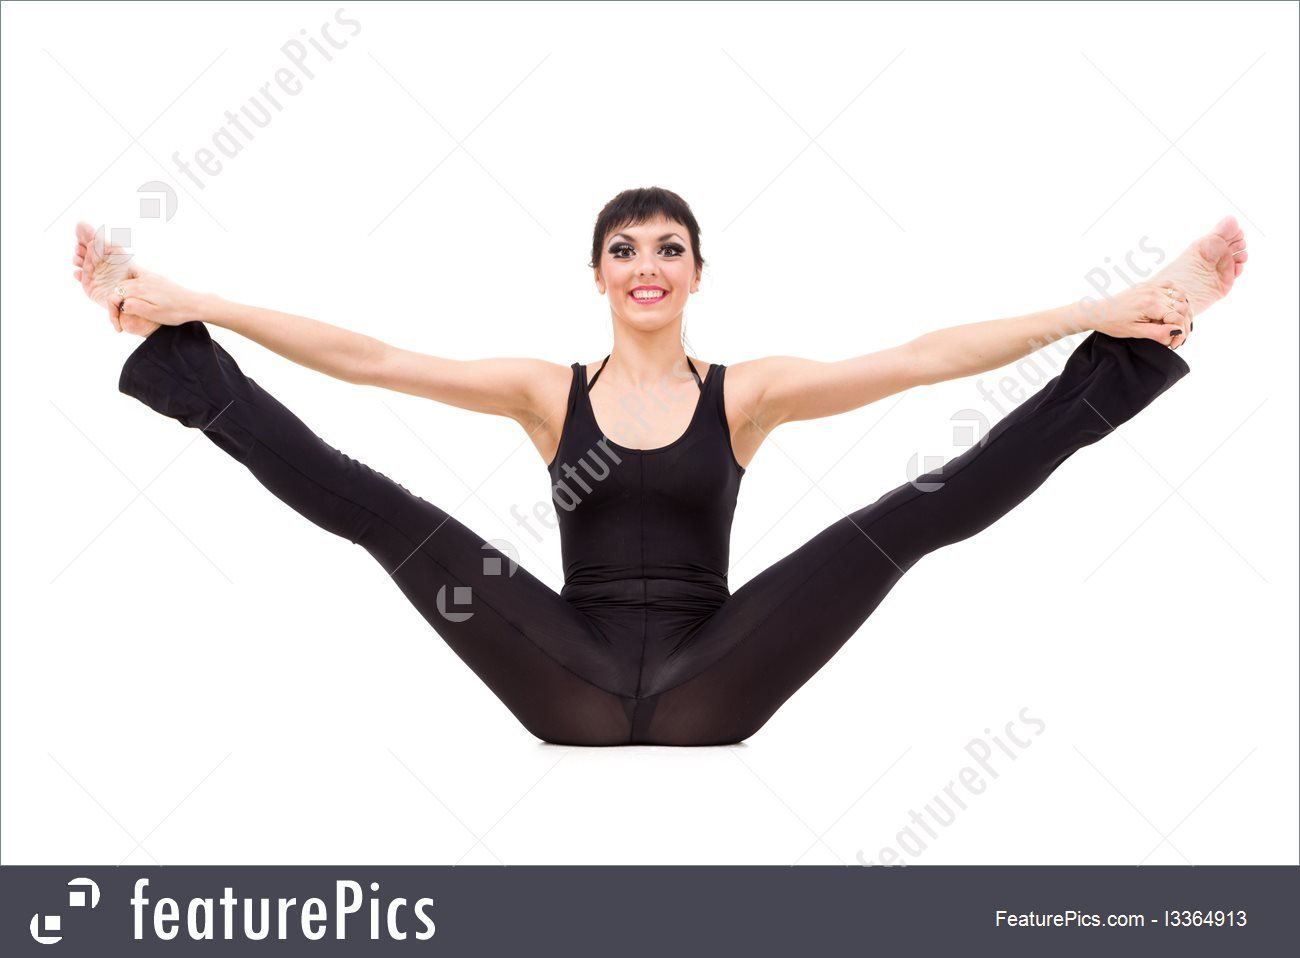 Venus reccomend Pics women doing splits in leotards